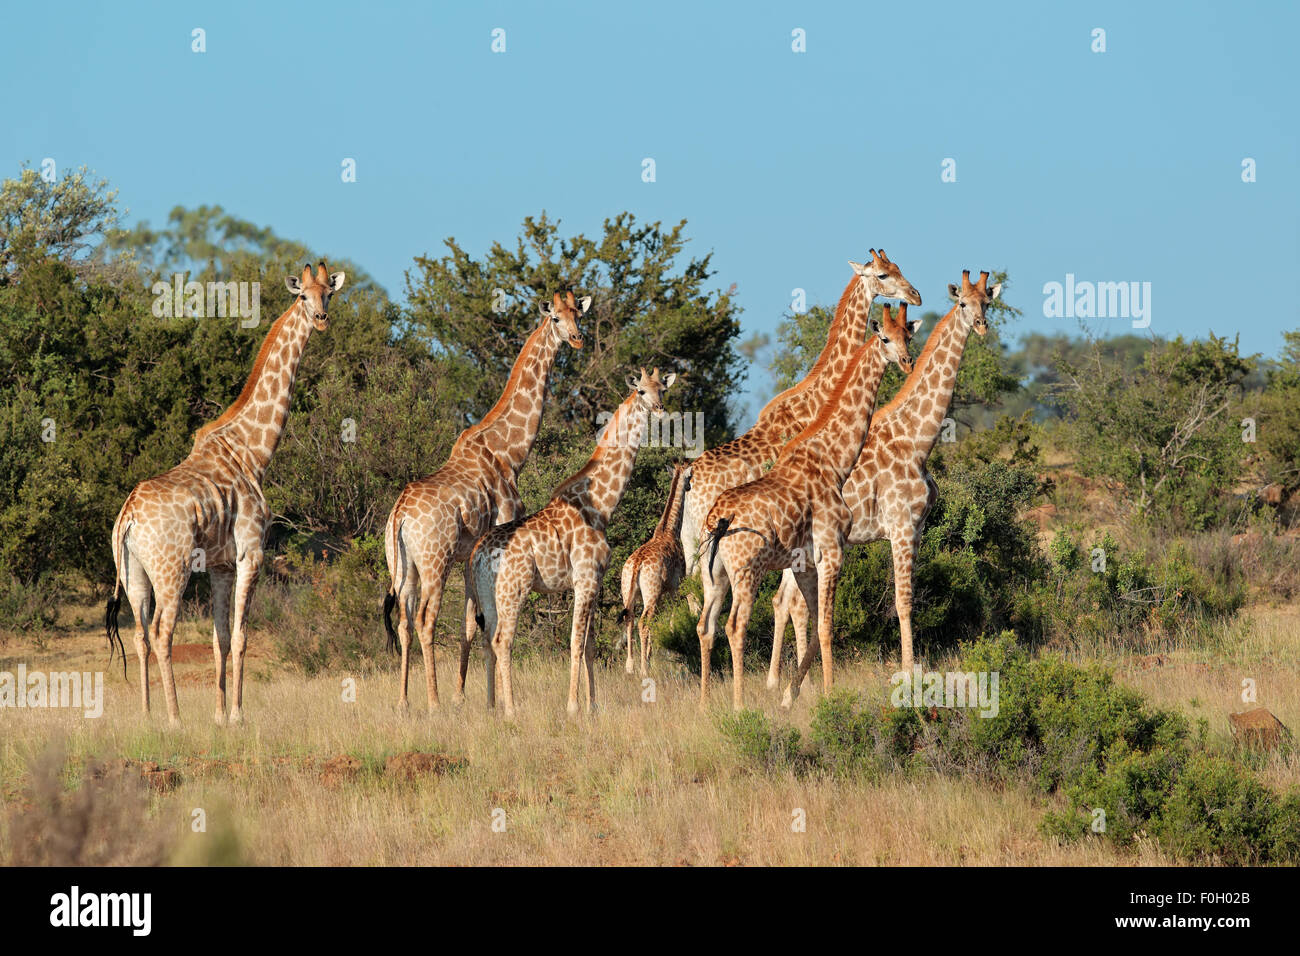 Small herd of giraffes (Giraffa camelopardalis) in natural habitat, South Africa Stock Photo